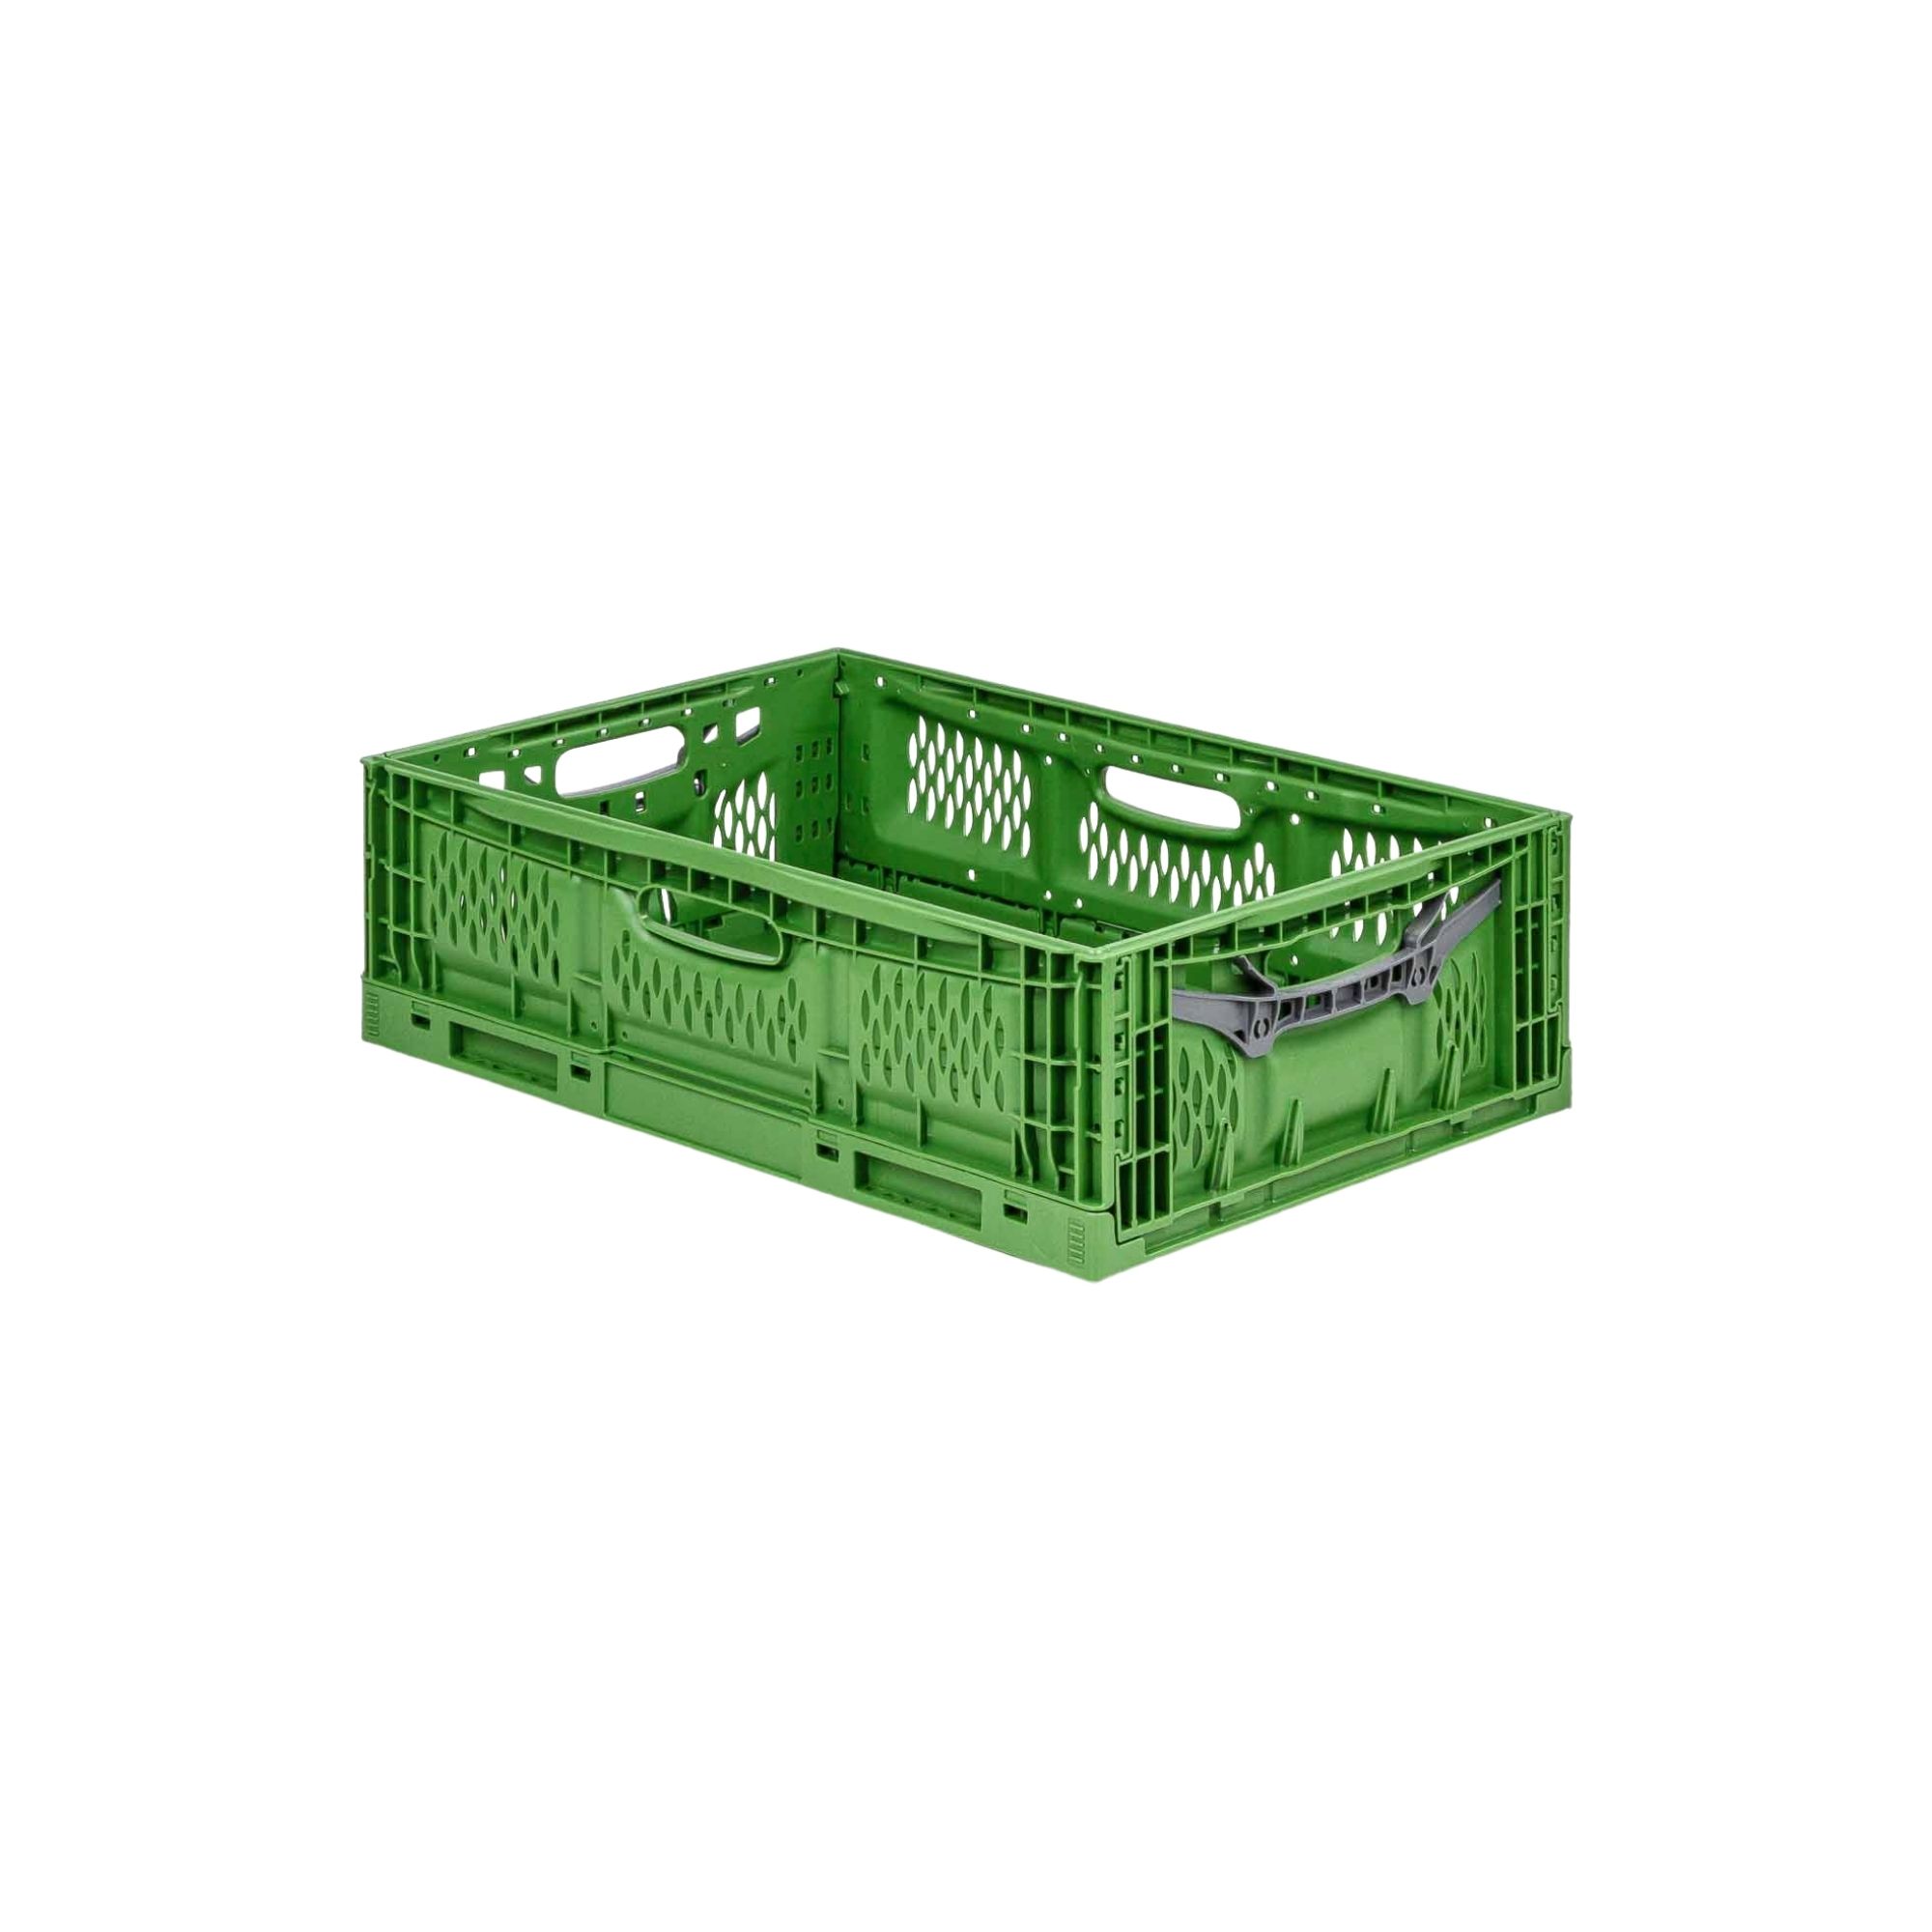 SuperSparSet 5x Stabile Profi-Klappbox Chameleon in Industriequalität | HxBxT 12x40x60cm | 23 Liter | klappbar stapelbar durchbrochen lebensmittelecht | Eurobox Eurobehälter Transportbehälter Stapelbehlter Faltbox